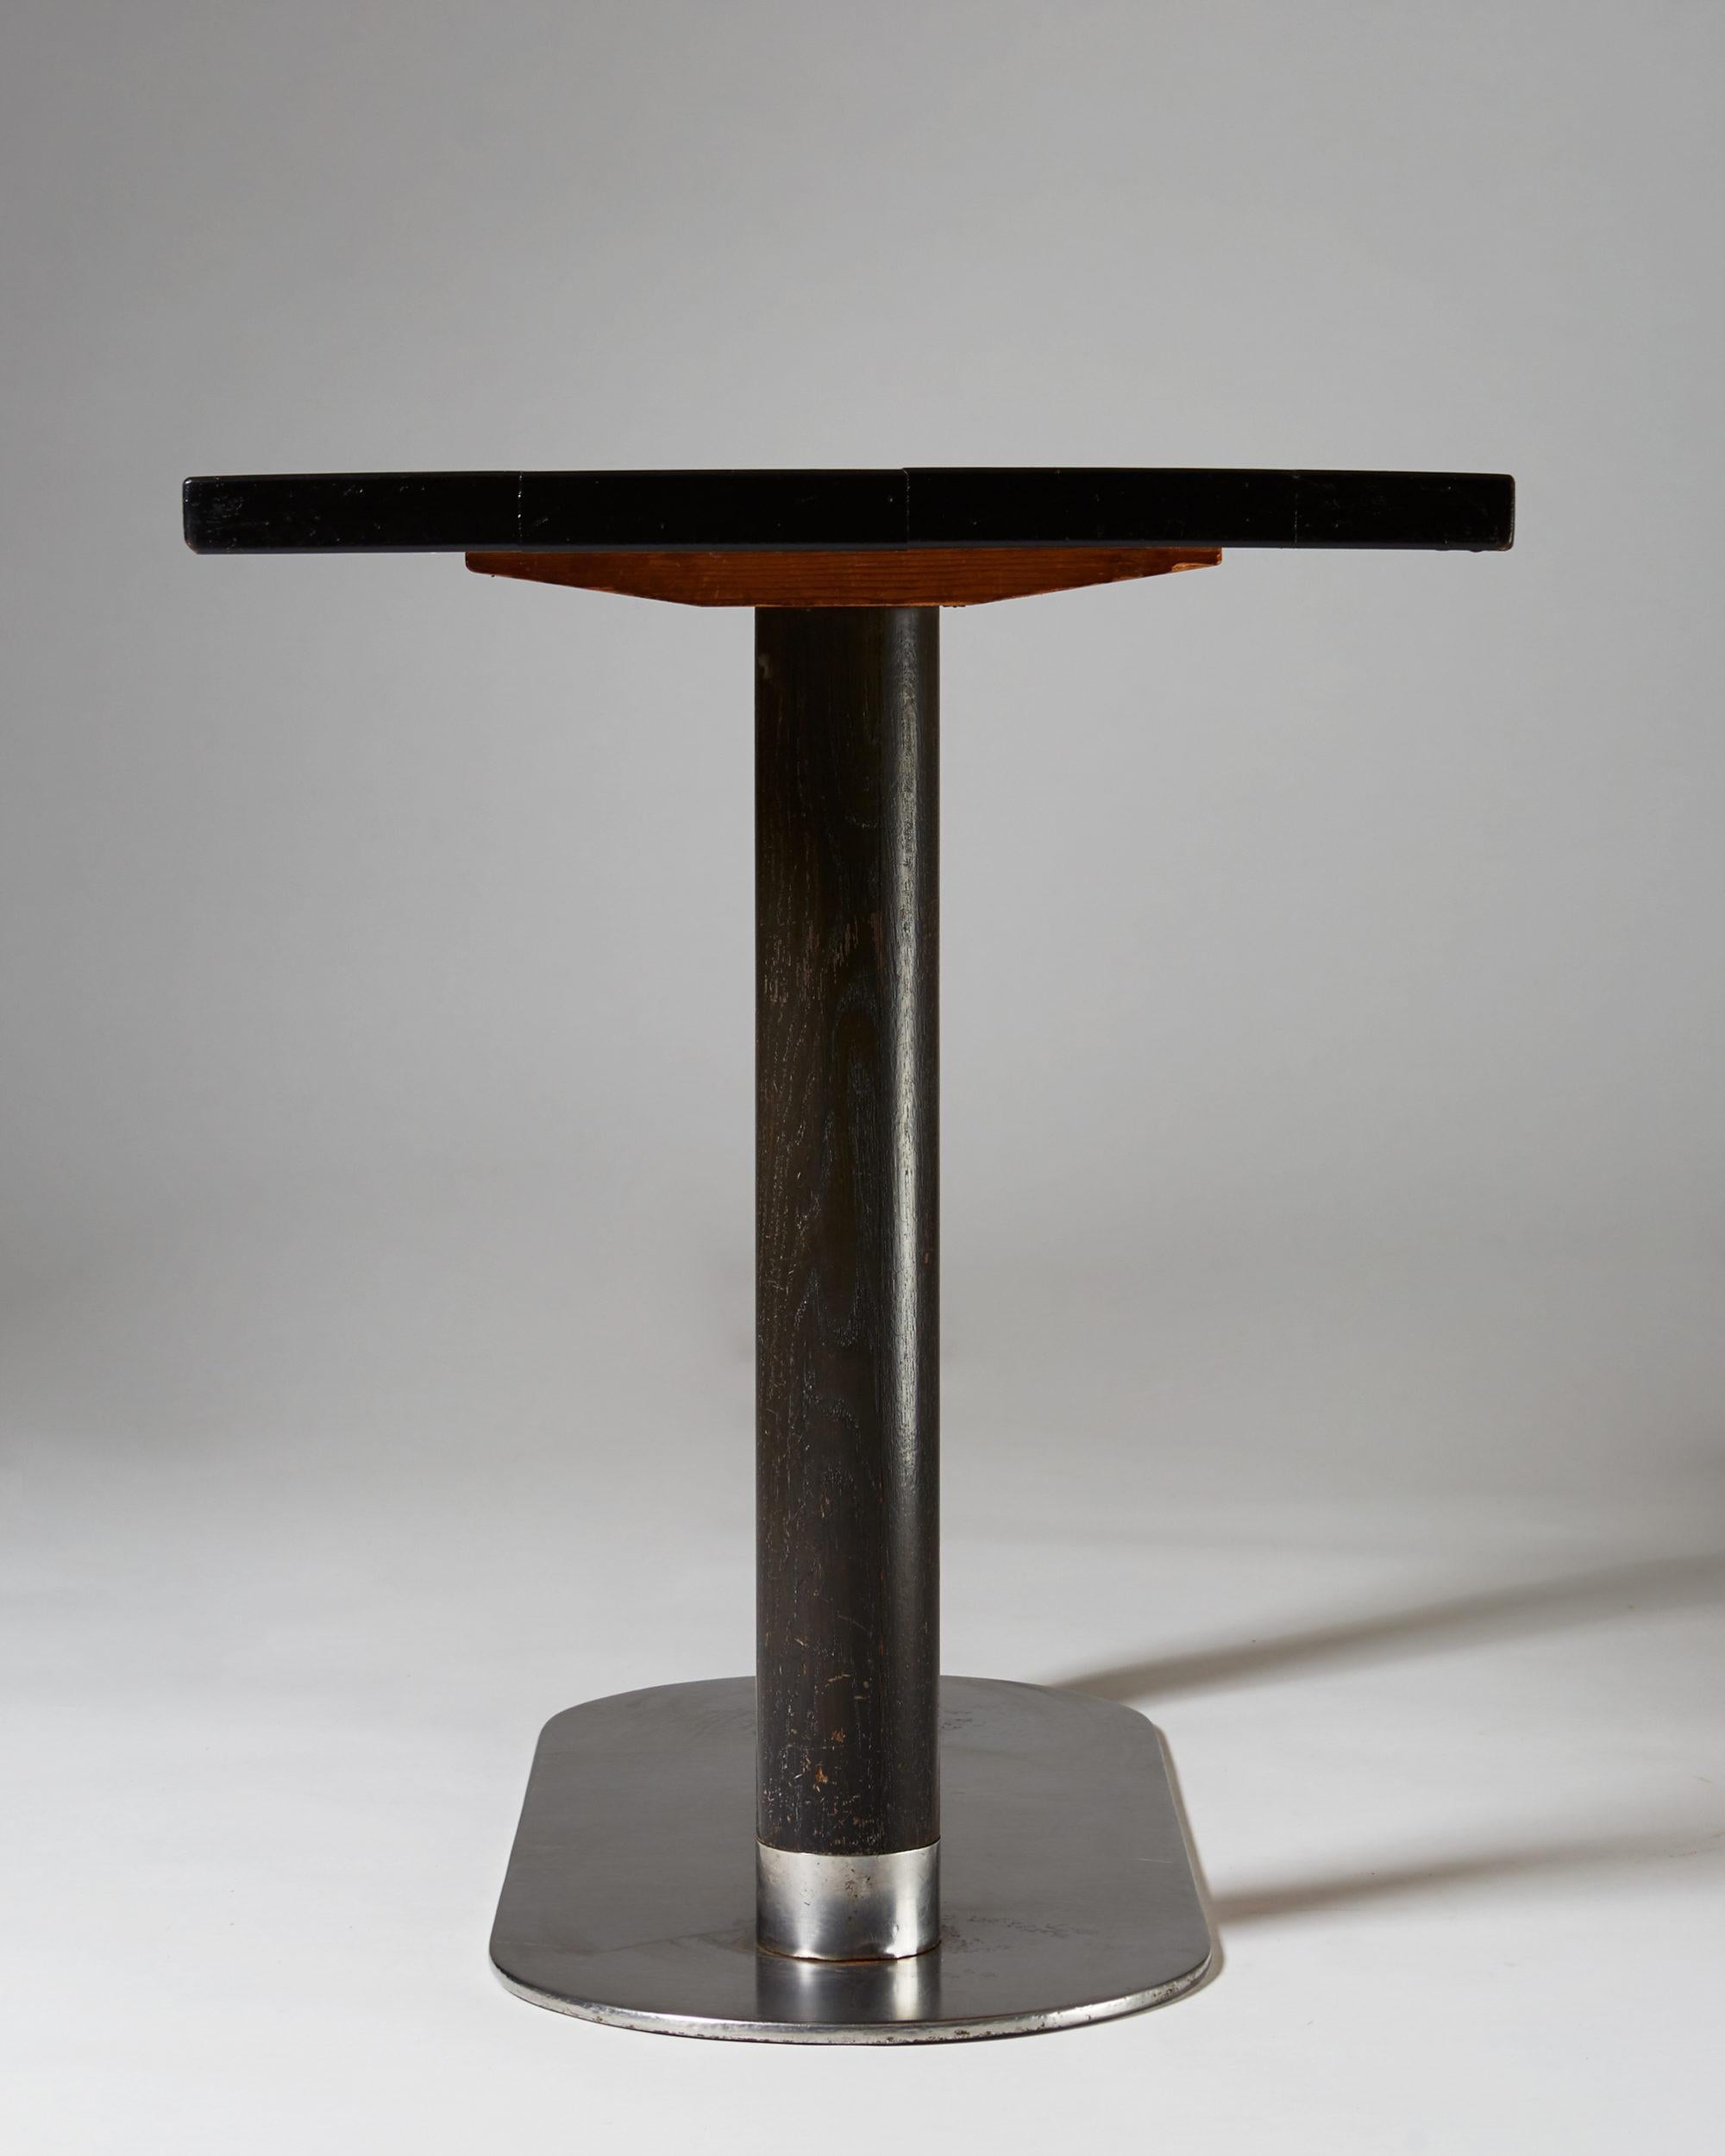 Oak Table ‘Typenko’ Designed by Axel Einar Hjorth for Nordiska Kompaniet, 1931